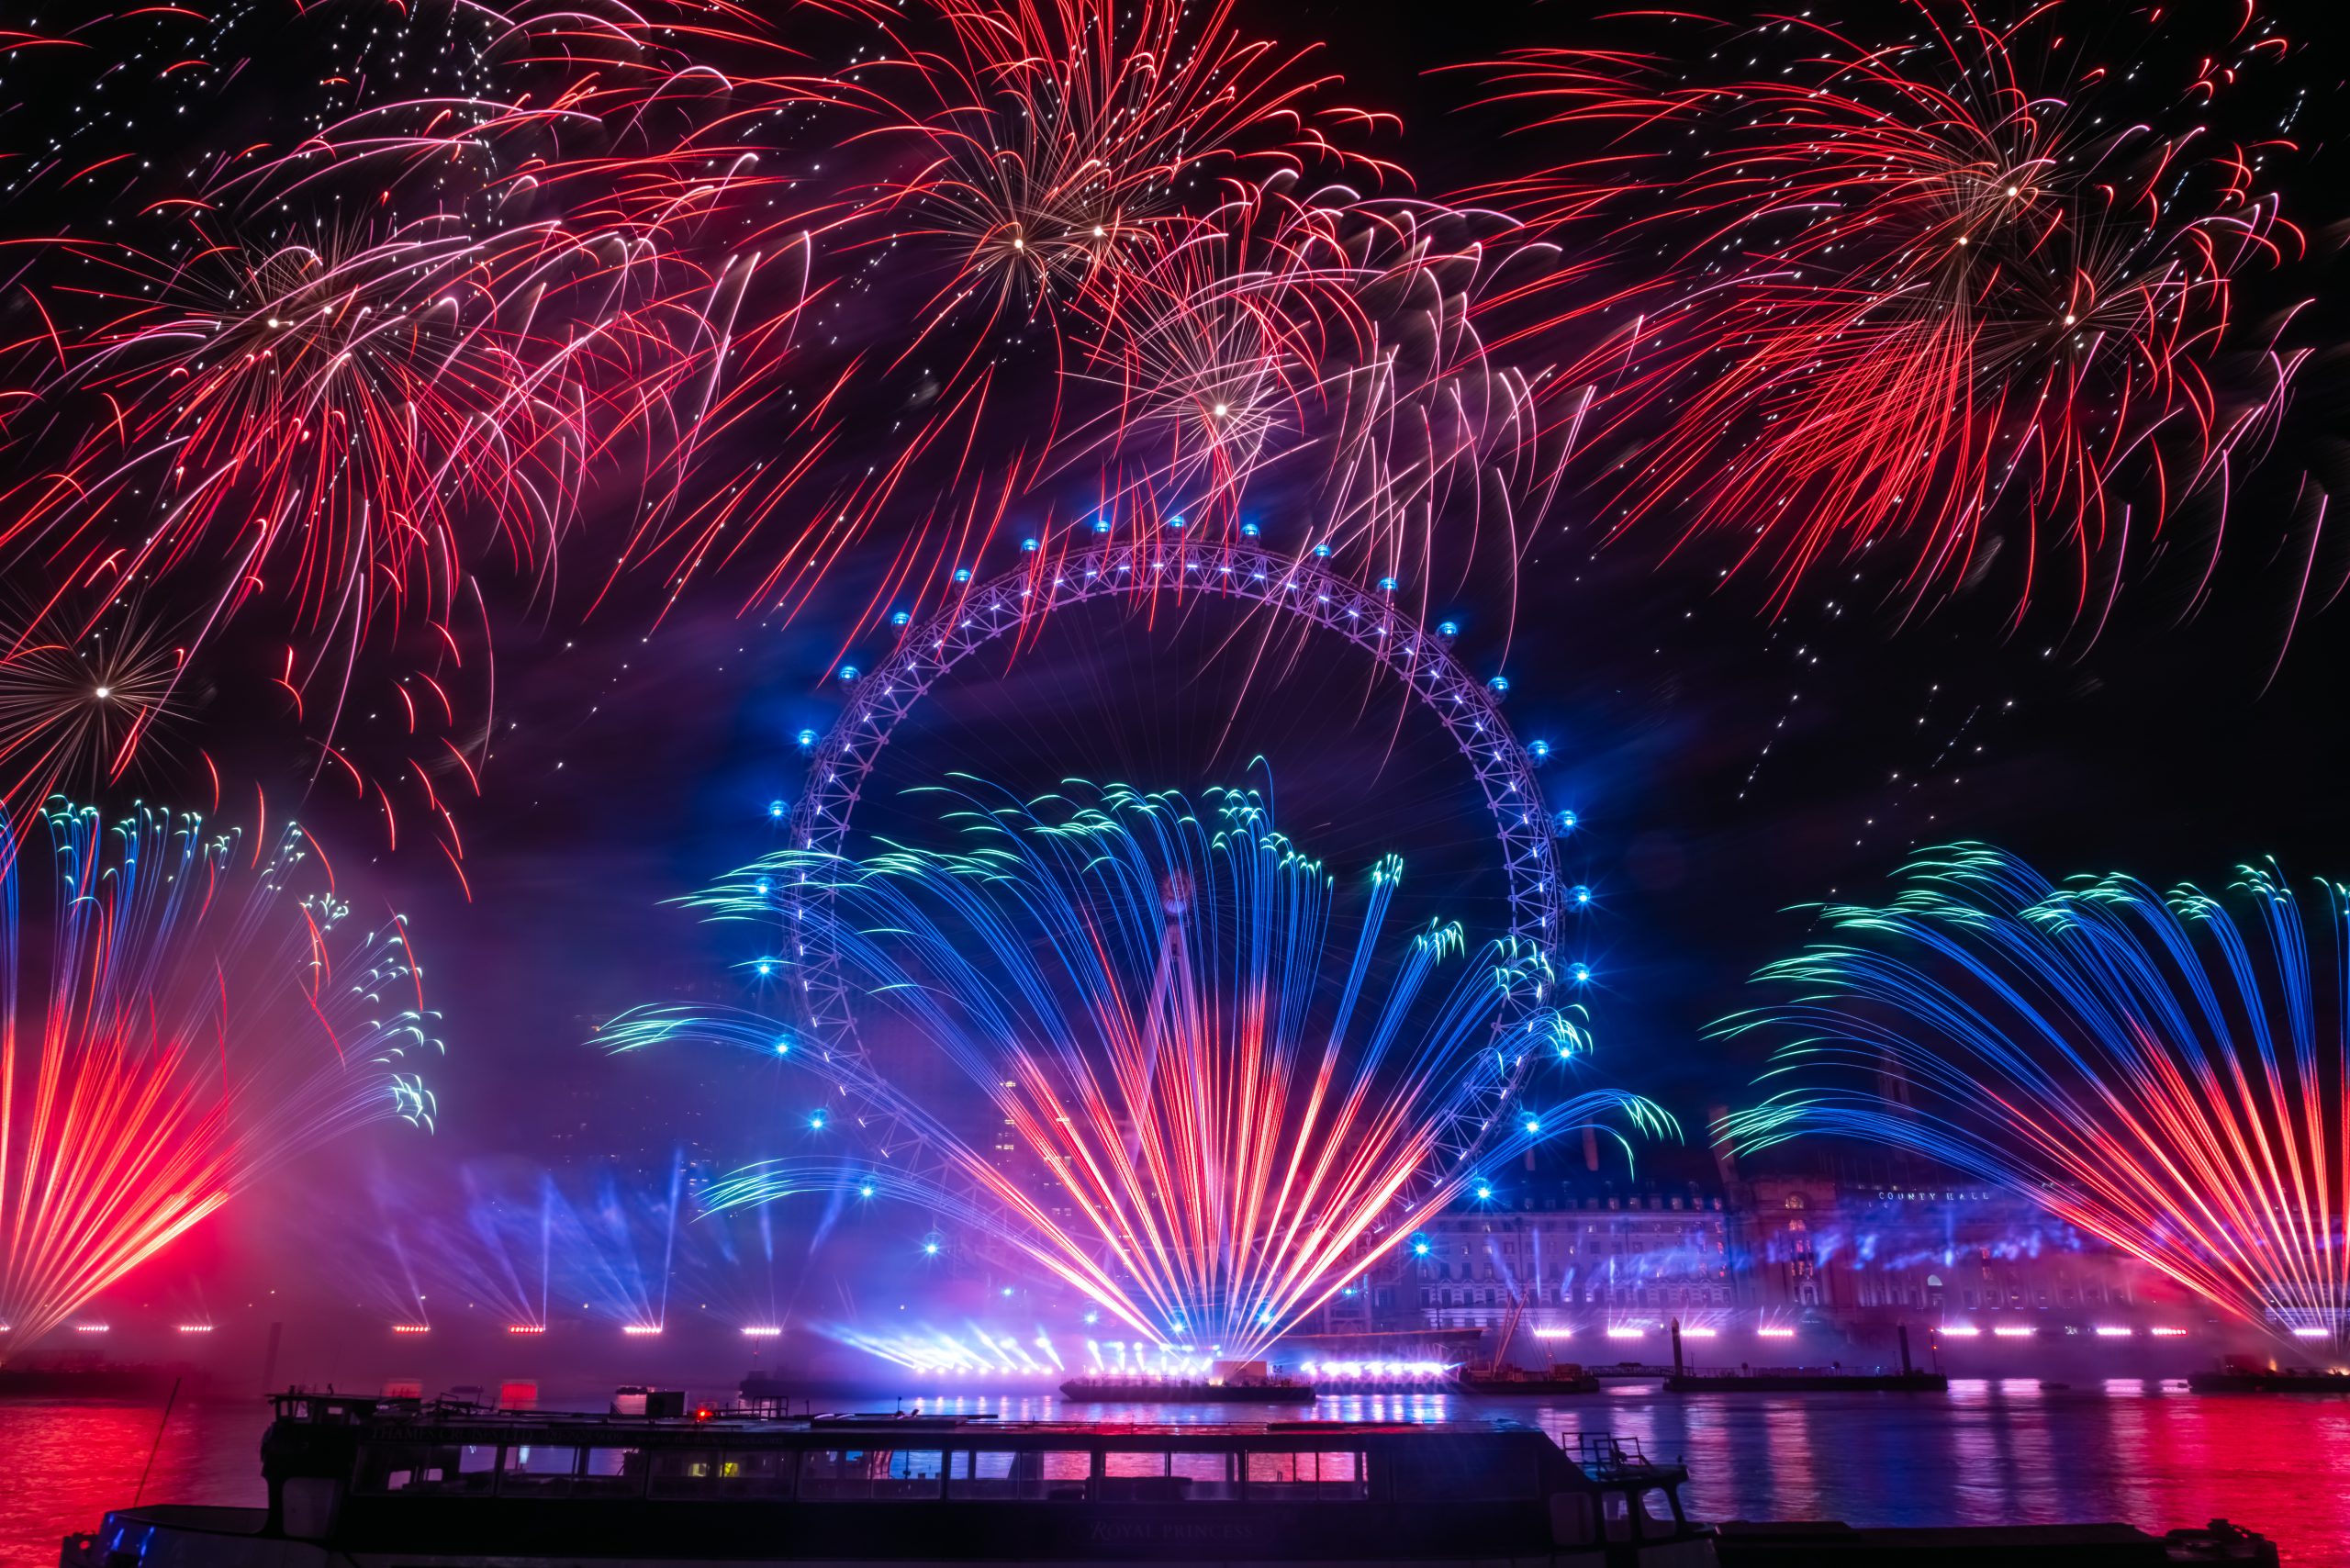 Fireworks over the London Eye